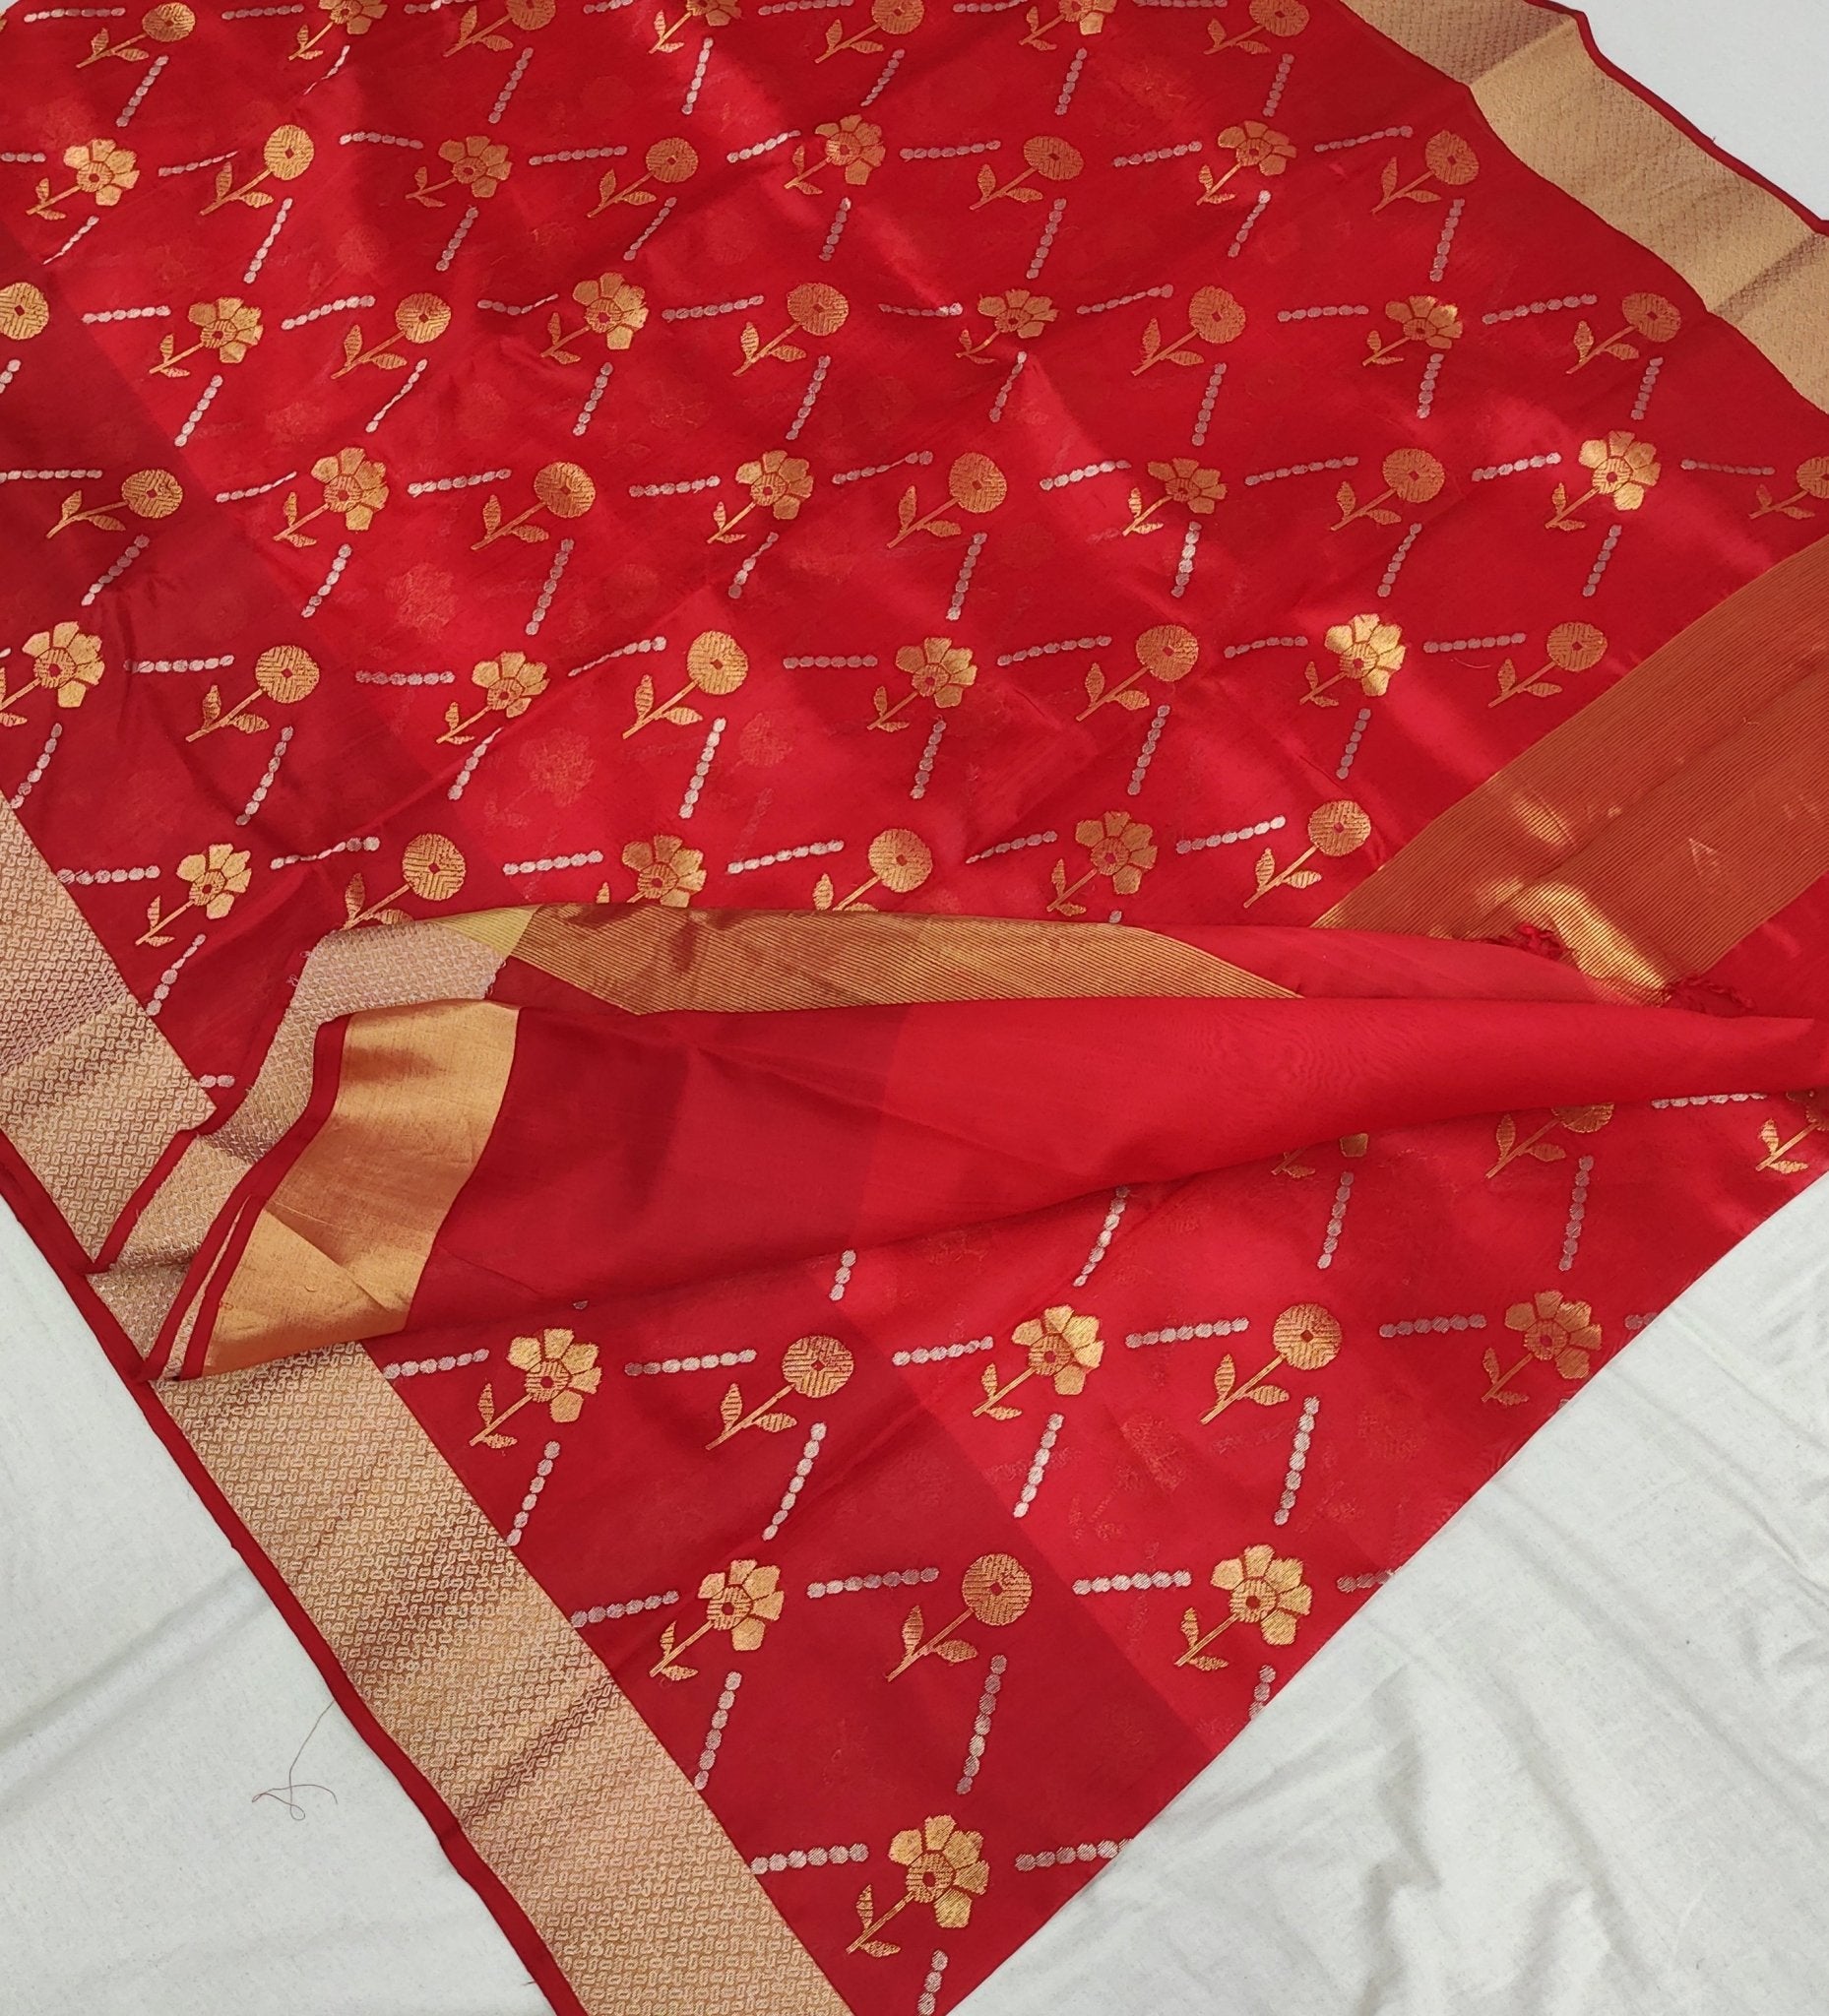 KHANDELWAL PRINT Festive Wear Chanderi Silk Saree, 6.40 at Rs 1350 in Jaipur